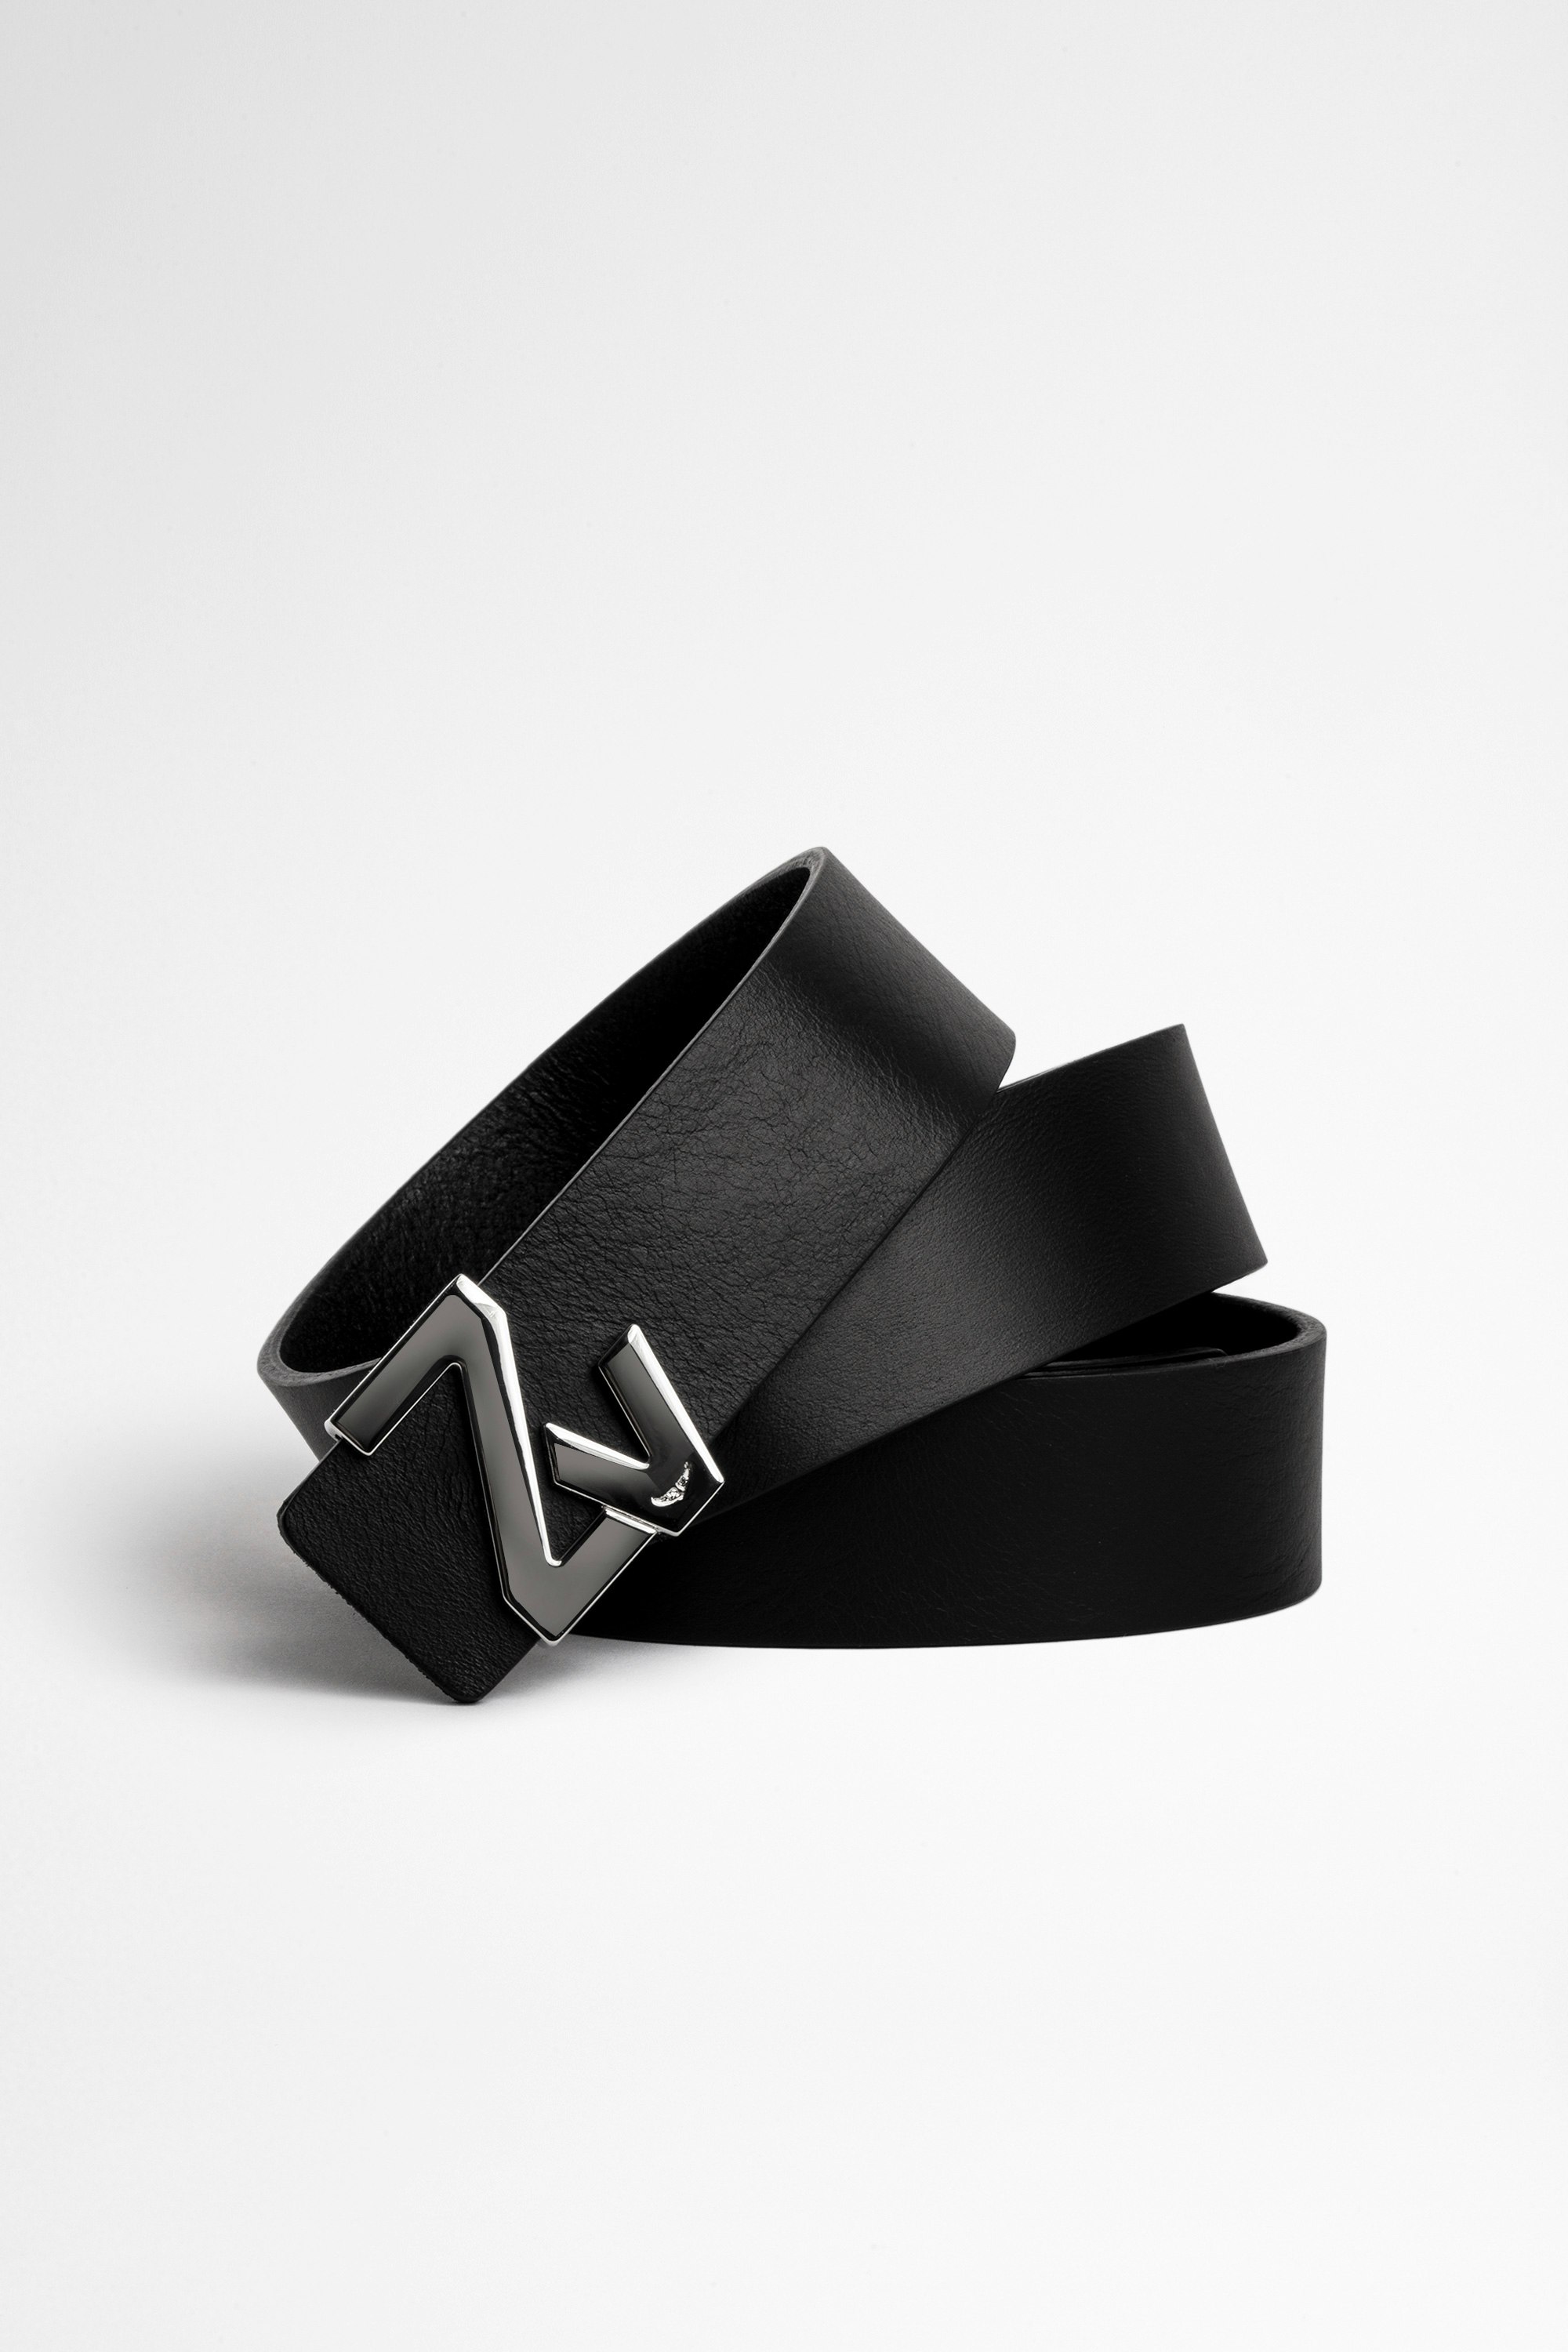 ZV Initiale La ベルト Women's black leather belt with silver ZV buckle